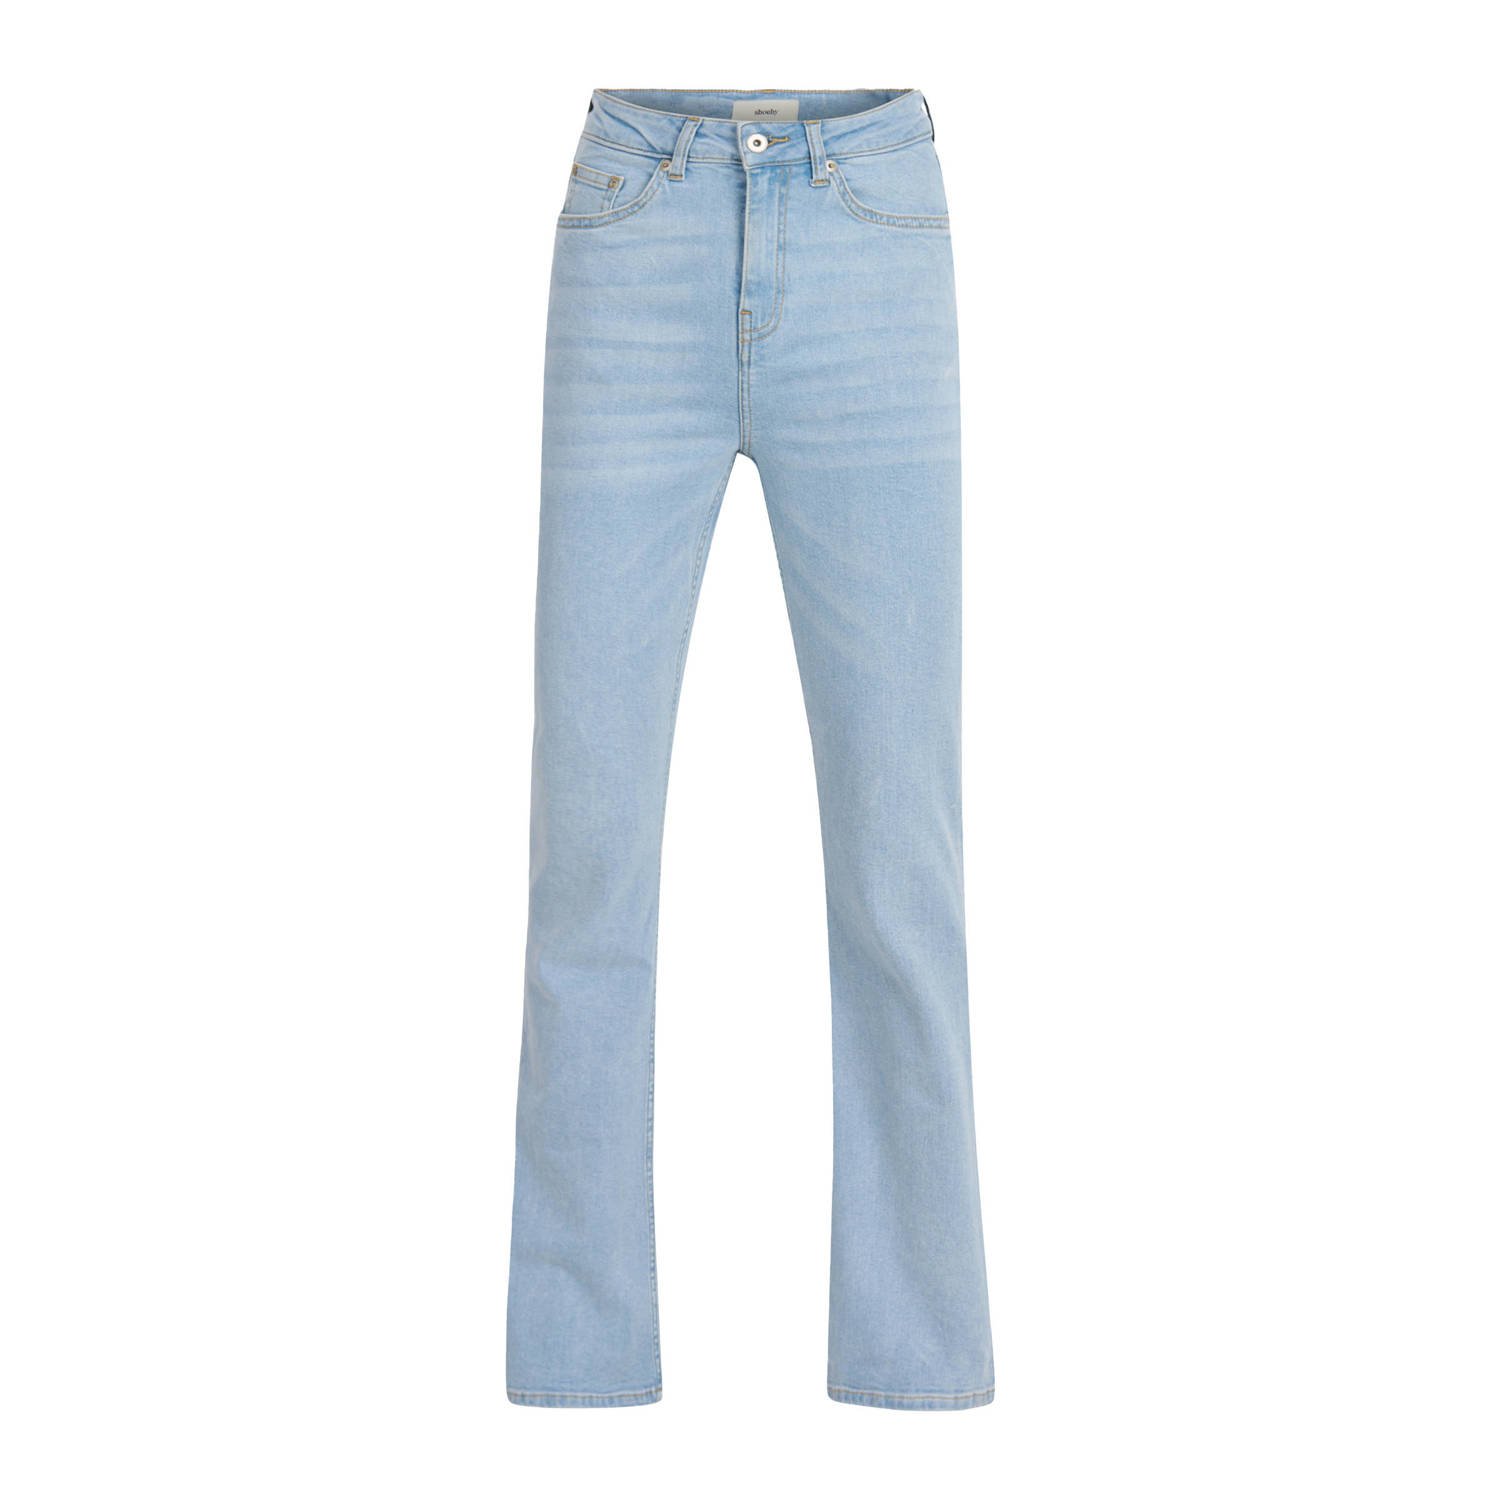 Shoeby flared jeans light blue denim